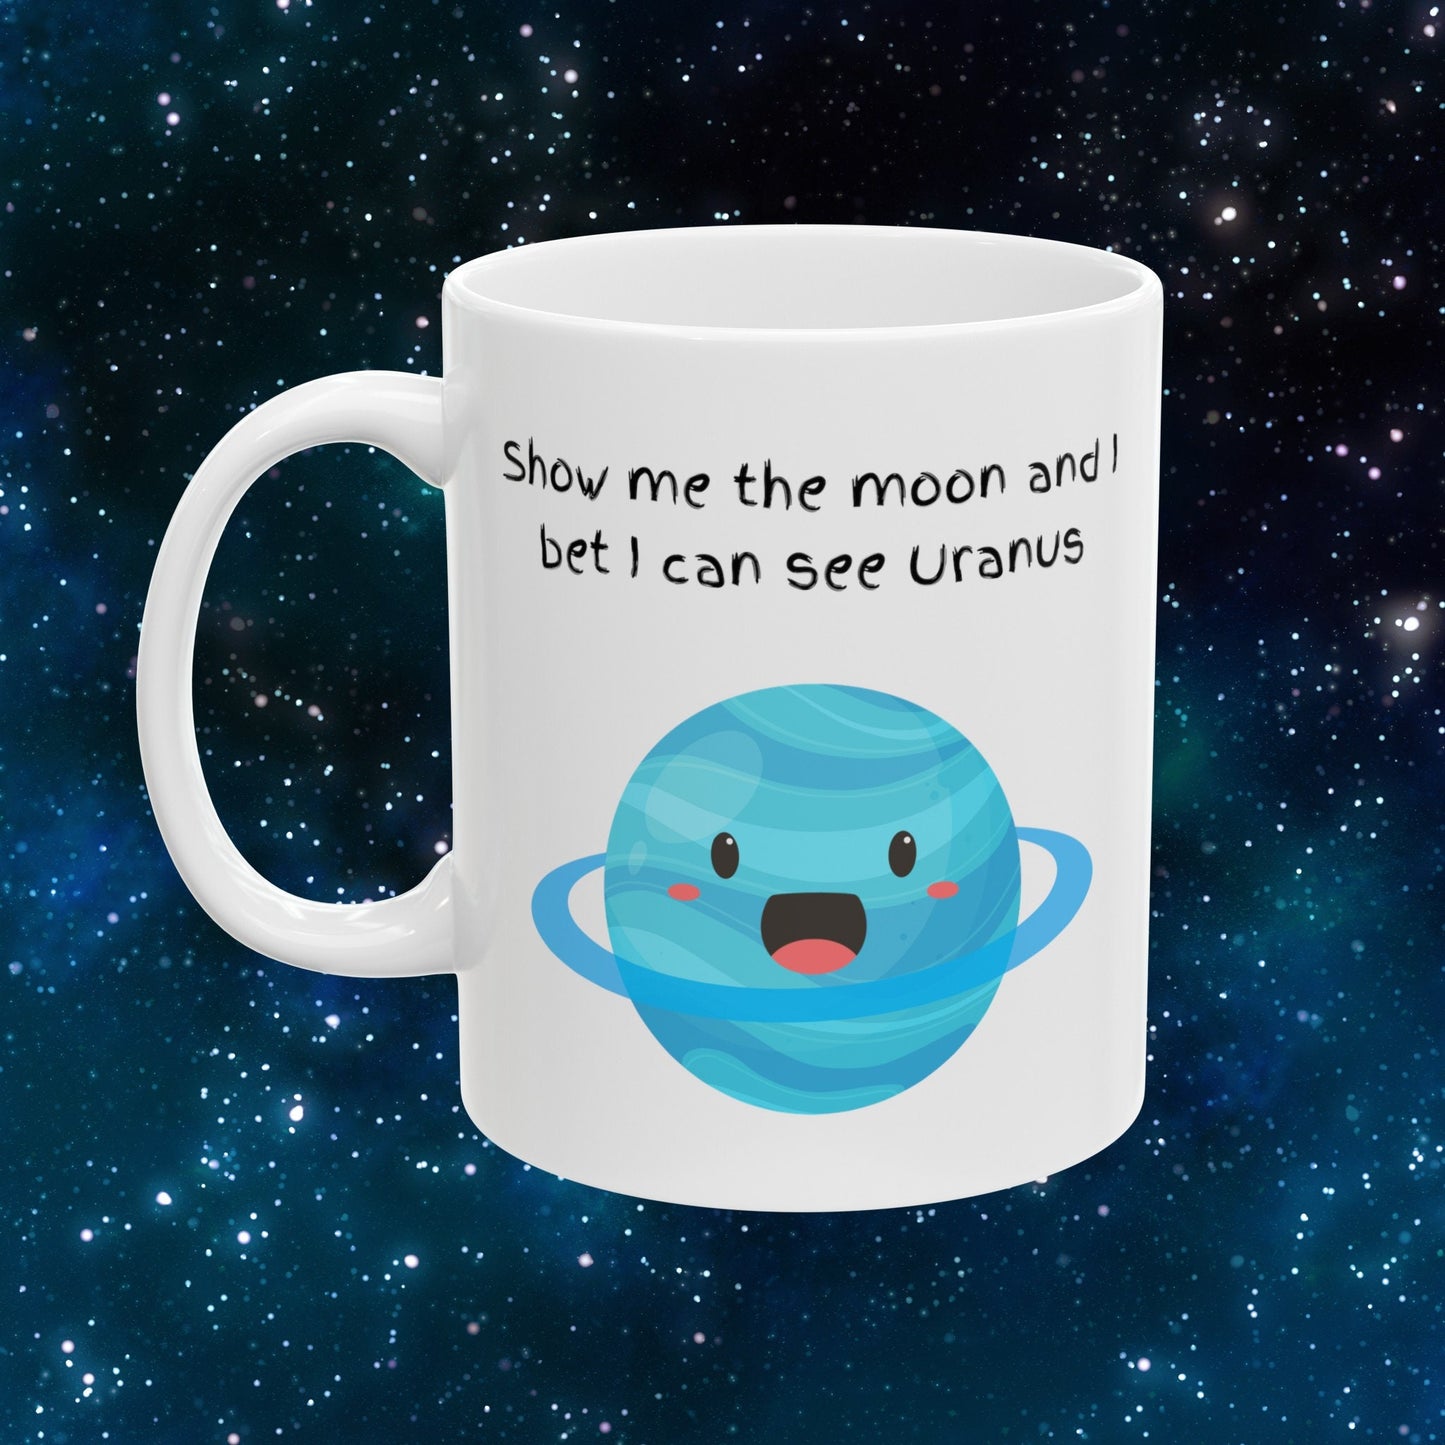 I Can see Uranus Coffee Mug, Uranus Mug, Cute Uranus Planet Mug, Funny Mug from Uranus, Drink from Uranus, Uranus Ceramic Mug,